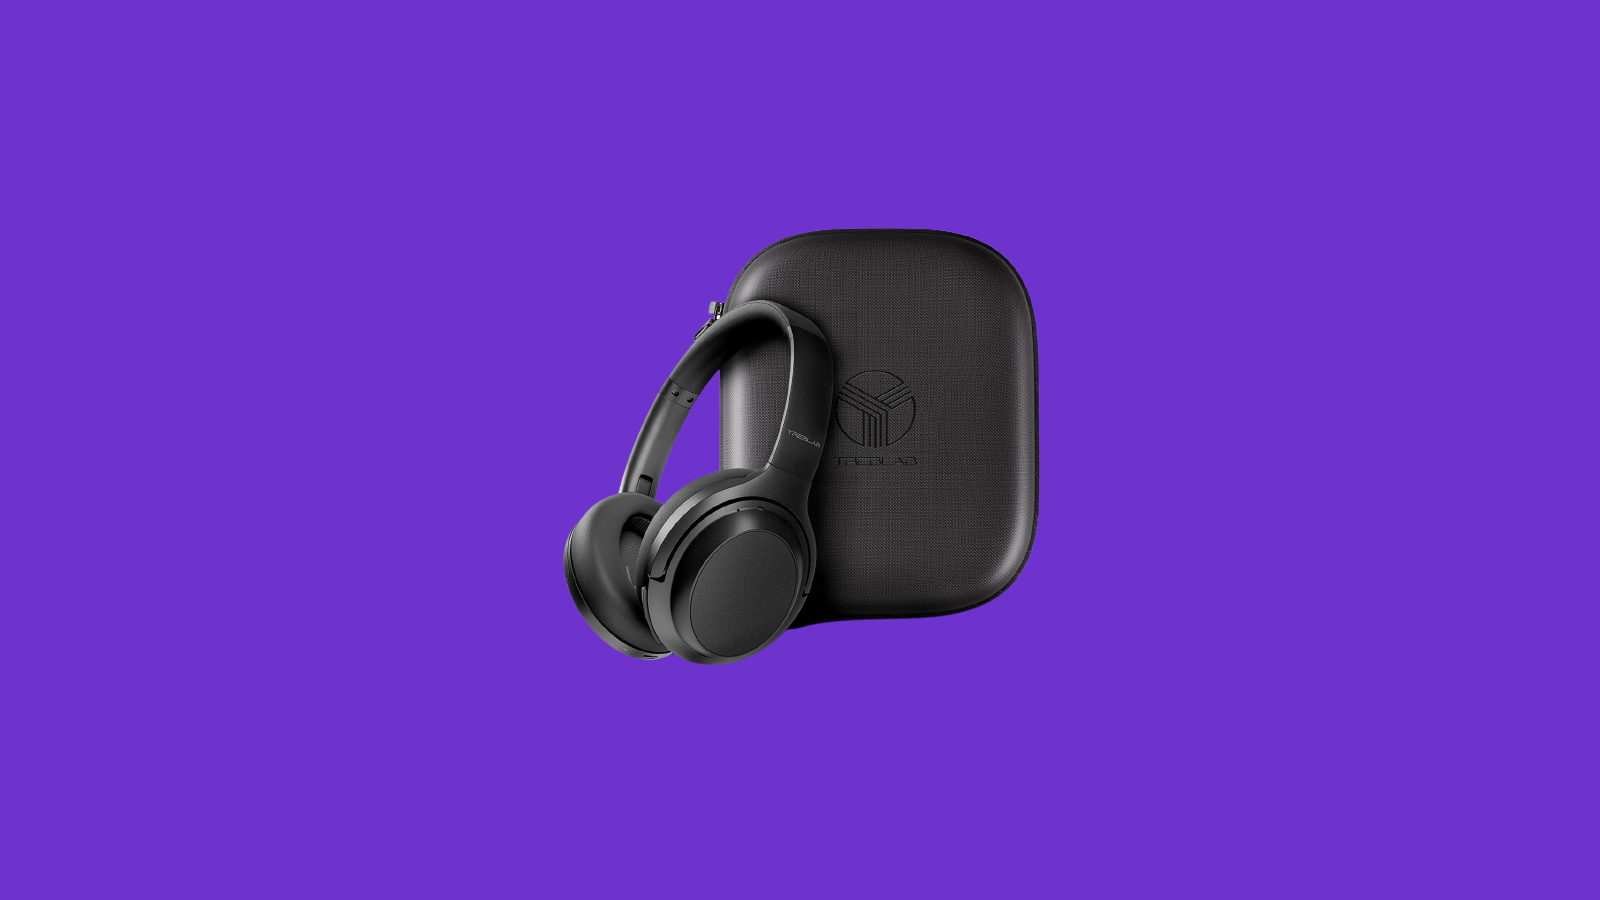 Unlock the Beat: Sony WH-CH520 Wireless Headphones – Black Friday